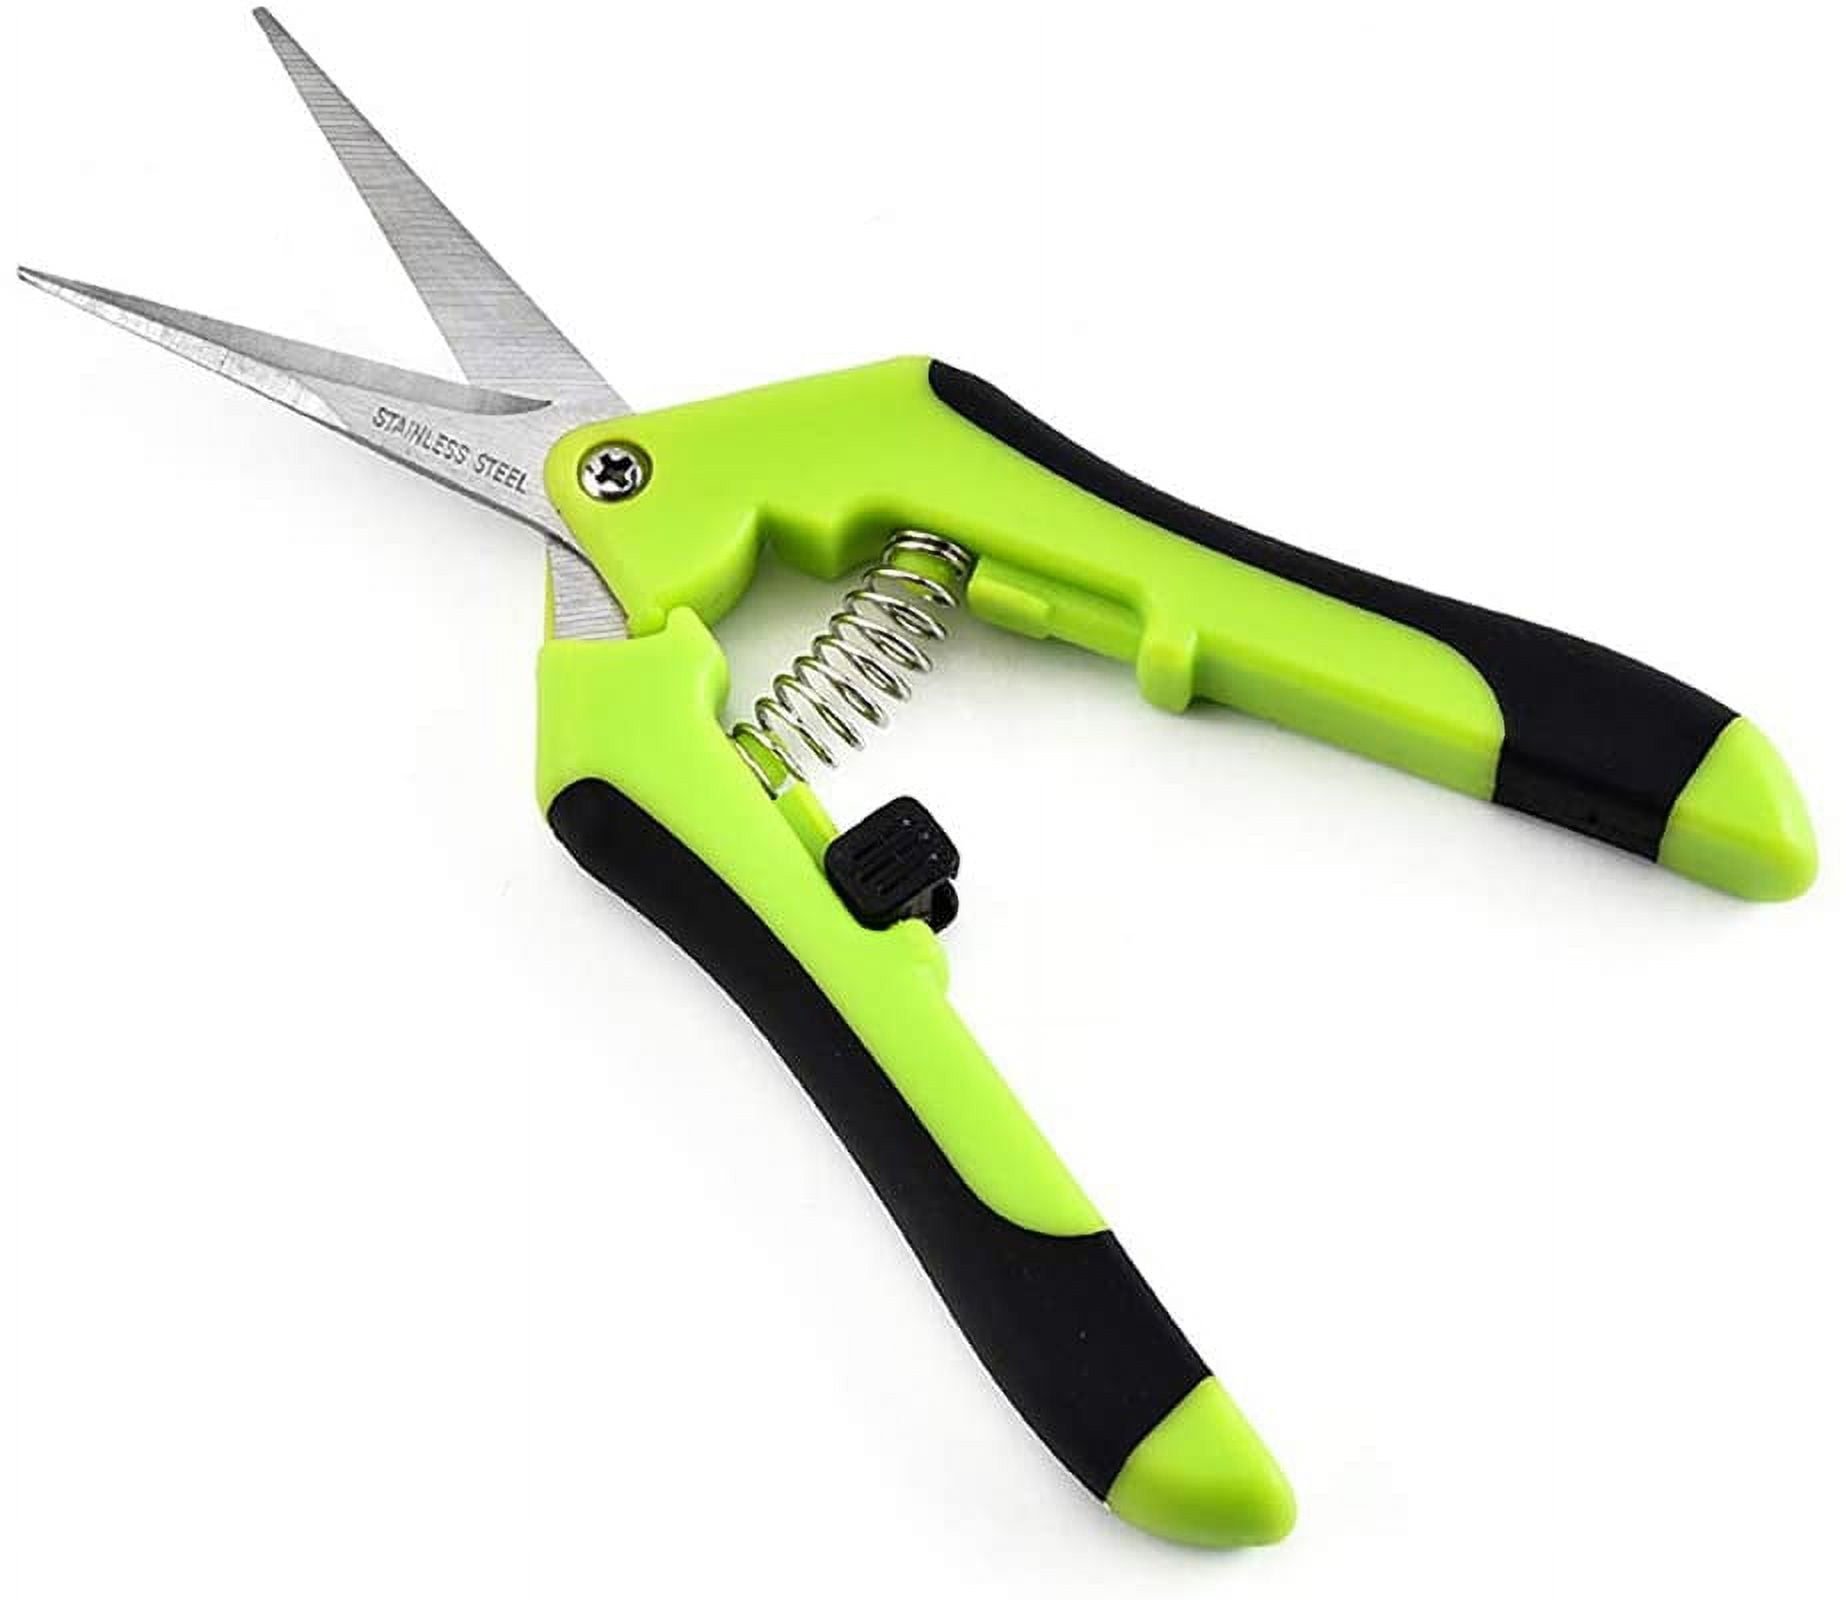 2pcs/set Garden Pruning Shears Stainless Steel Blade Handheld Pruning Kit  With 1pc Gardening Glove, Safe, Efficient And Labor-saving.